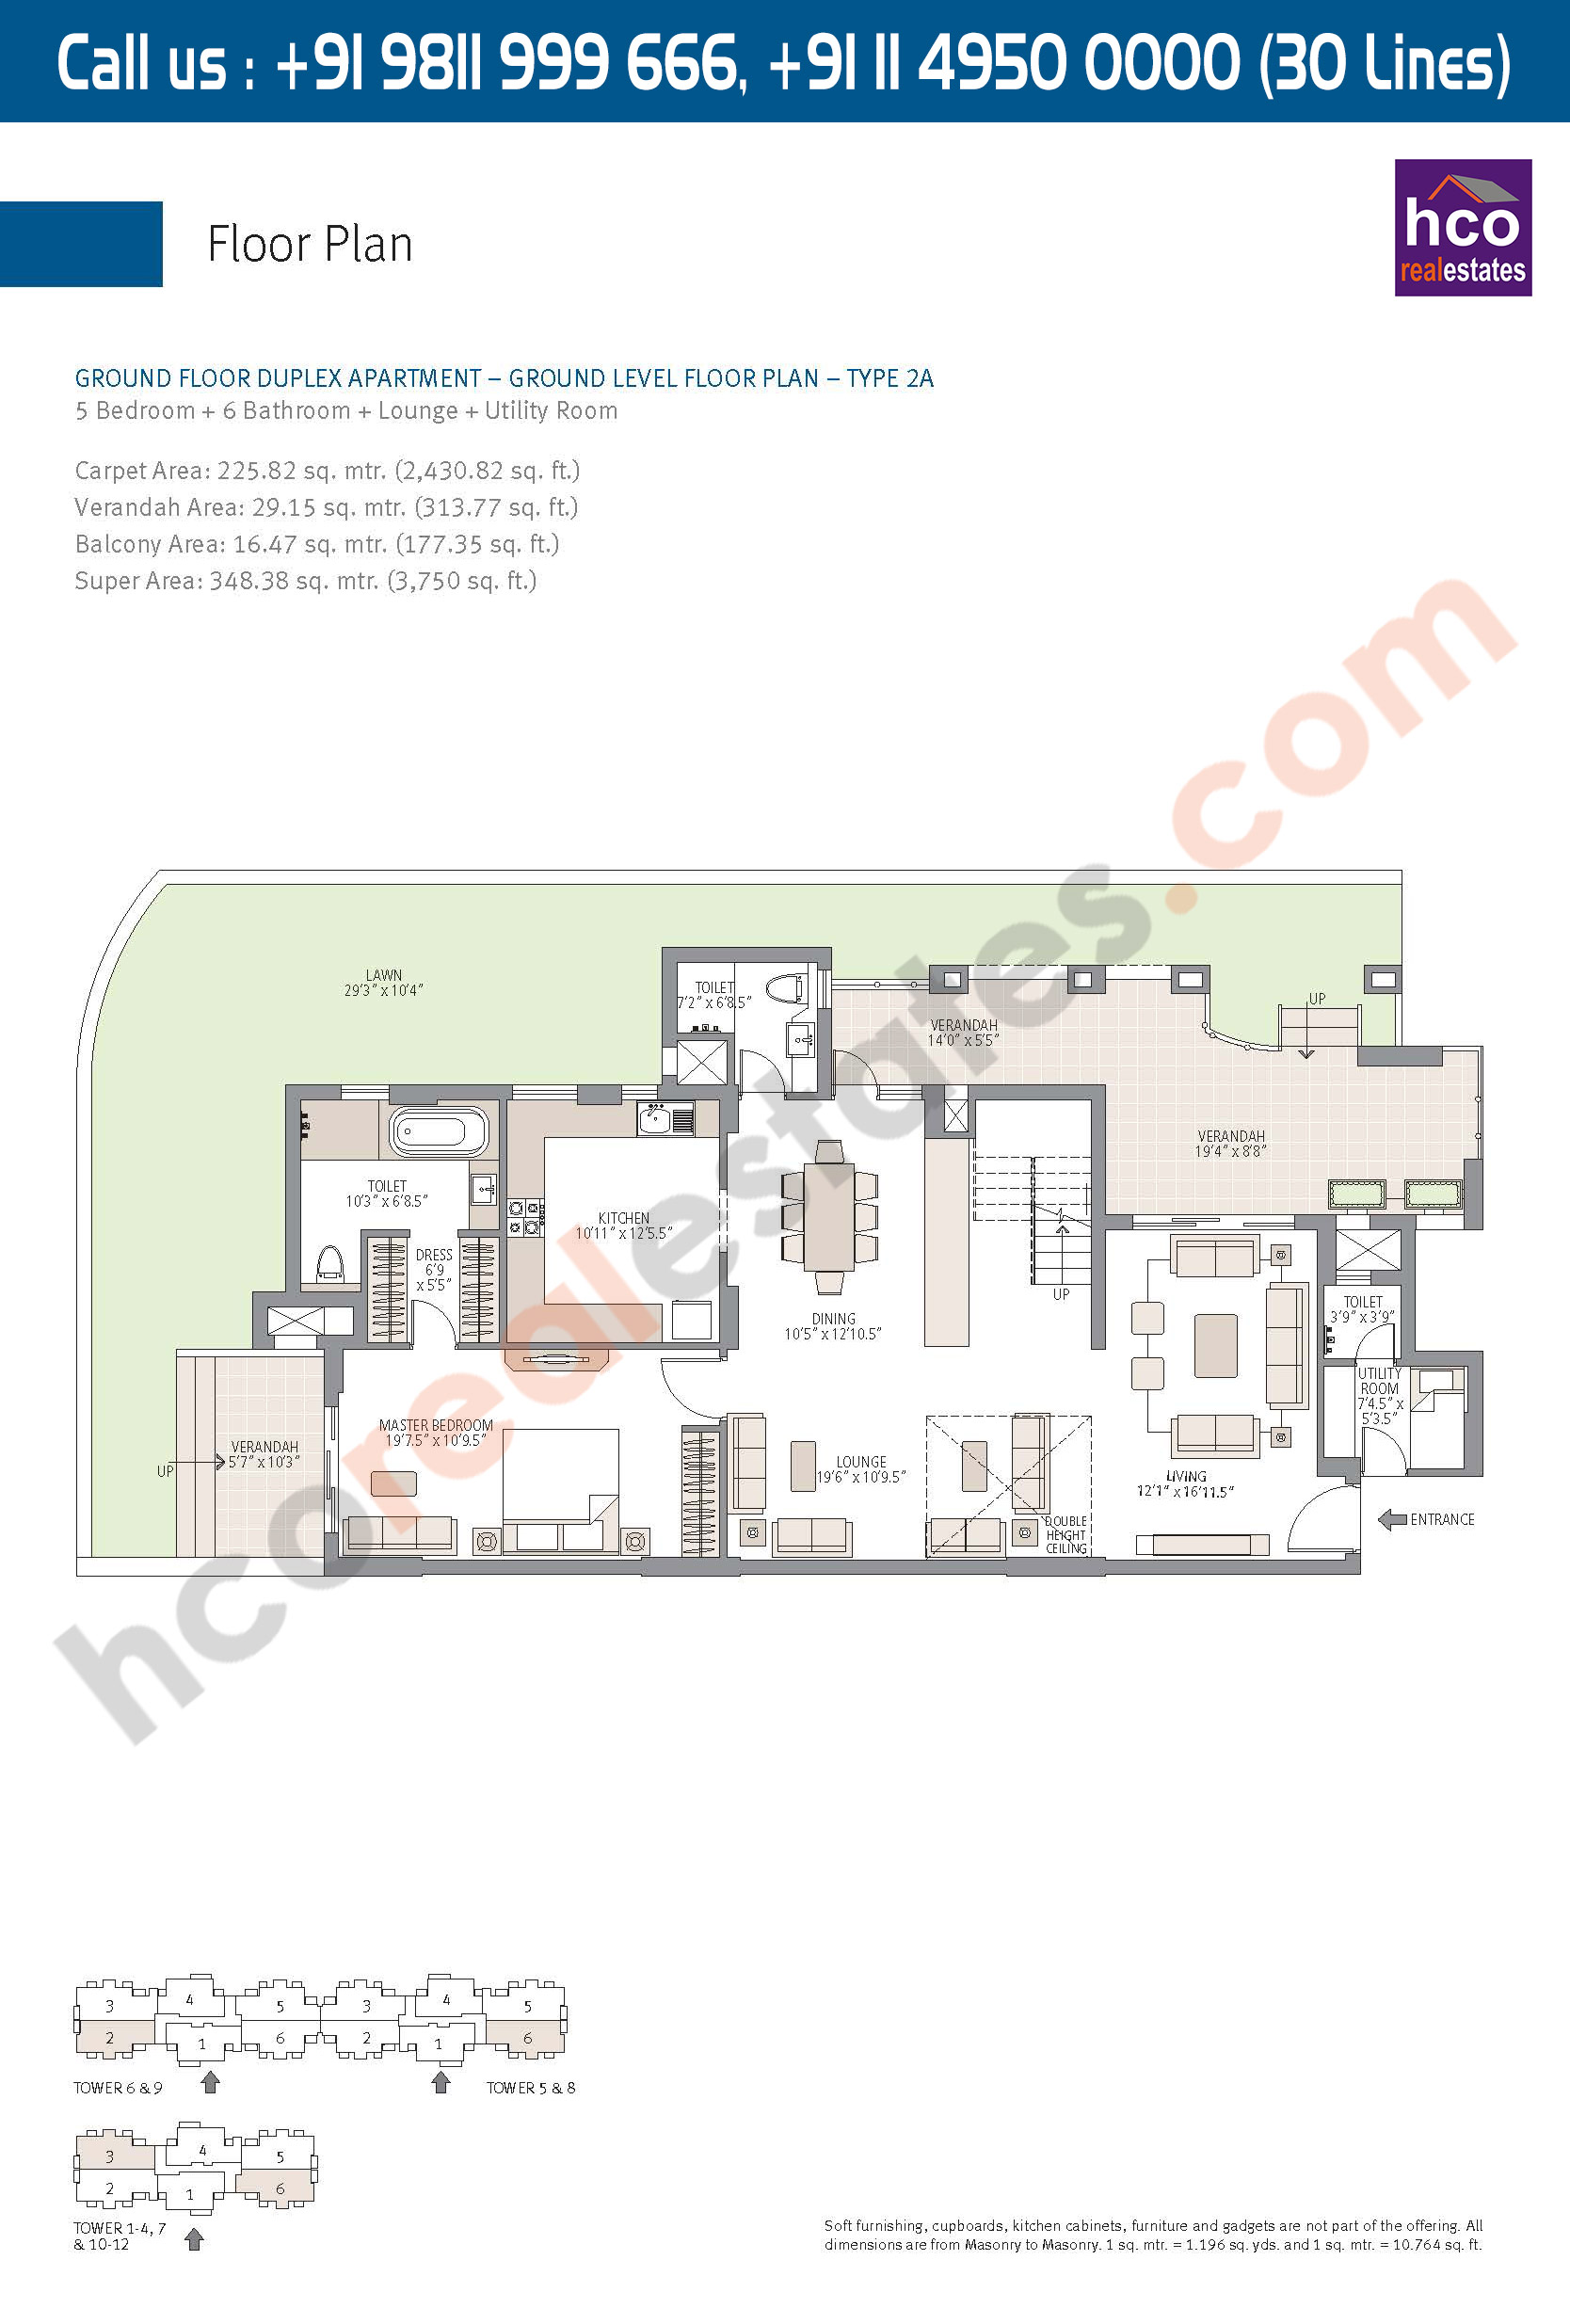 Type - 2A, Ground Level Floor Plan, Ground Floor Duplex, Apartment Carpet Area : 2430 Sq. Ft